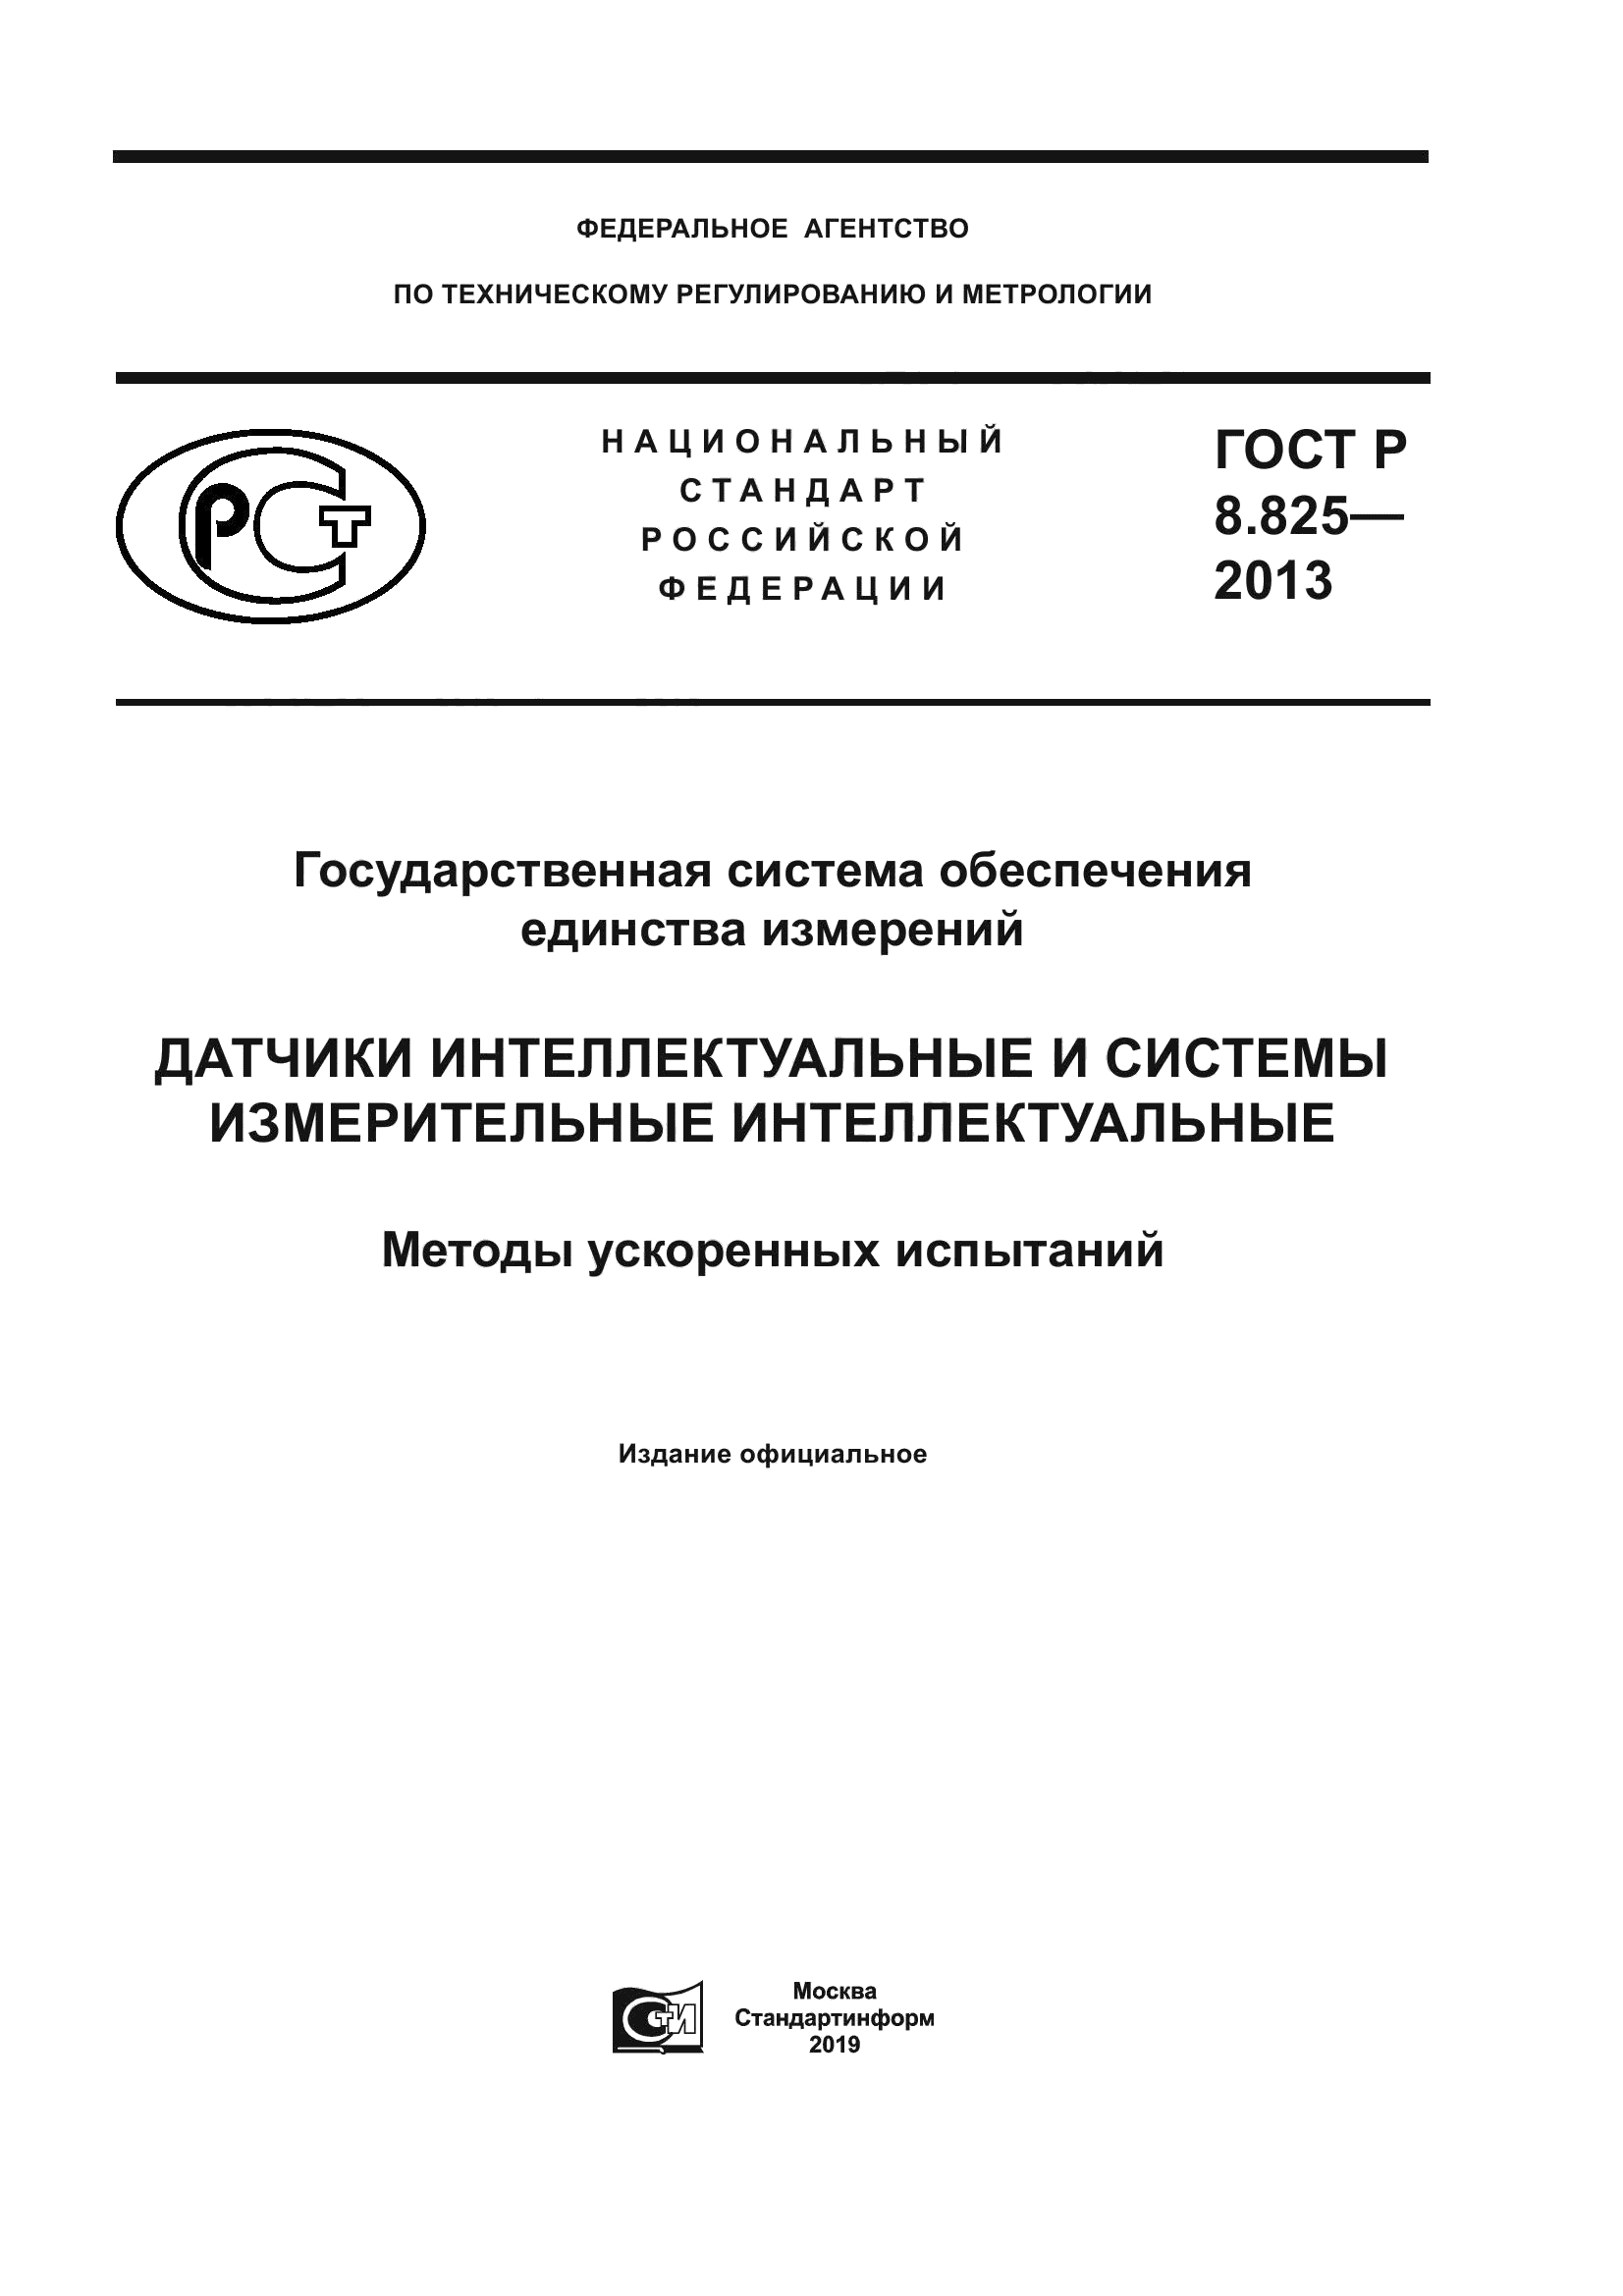 ГОСТ Р 8.825-2013